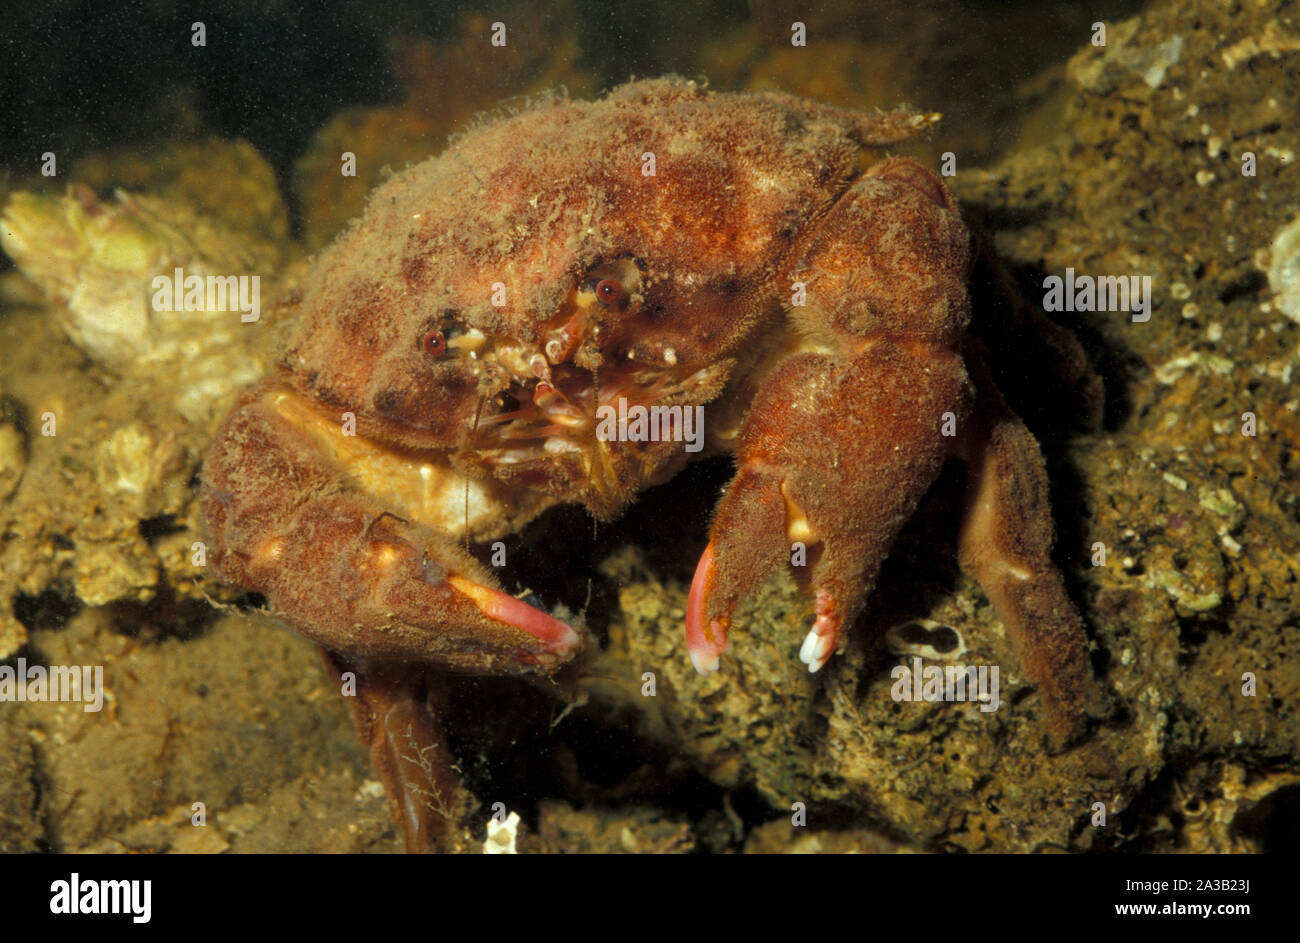 Sponge Crab, Dromia personata,Dromiidae. Mediterranean Sea Stock Photo